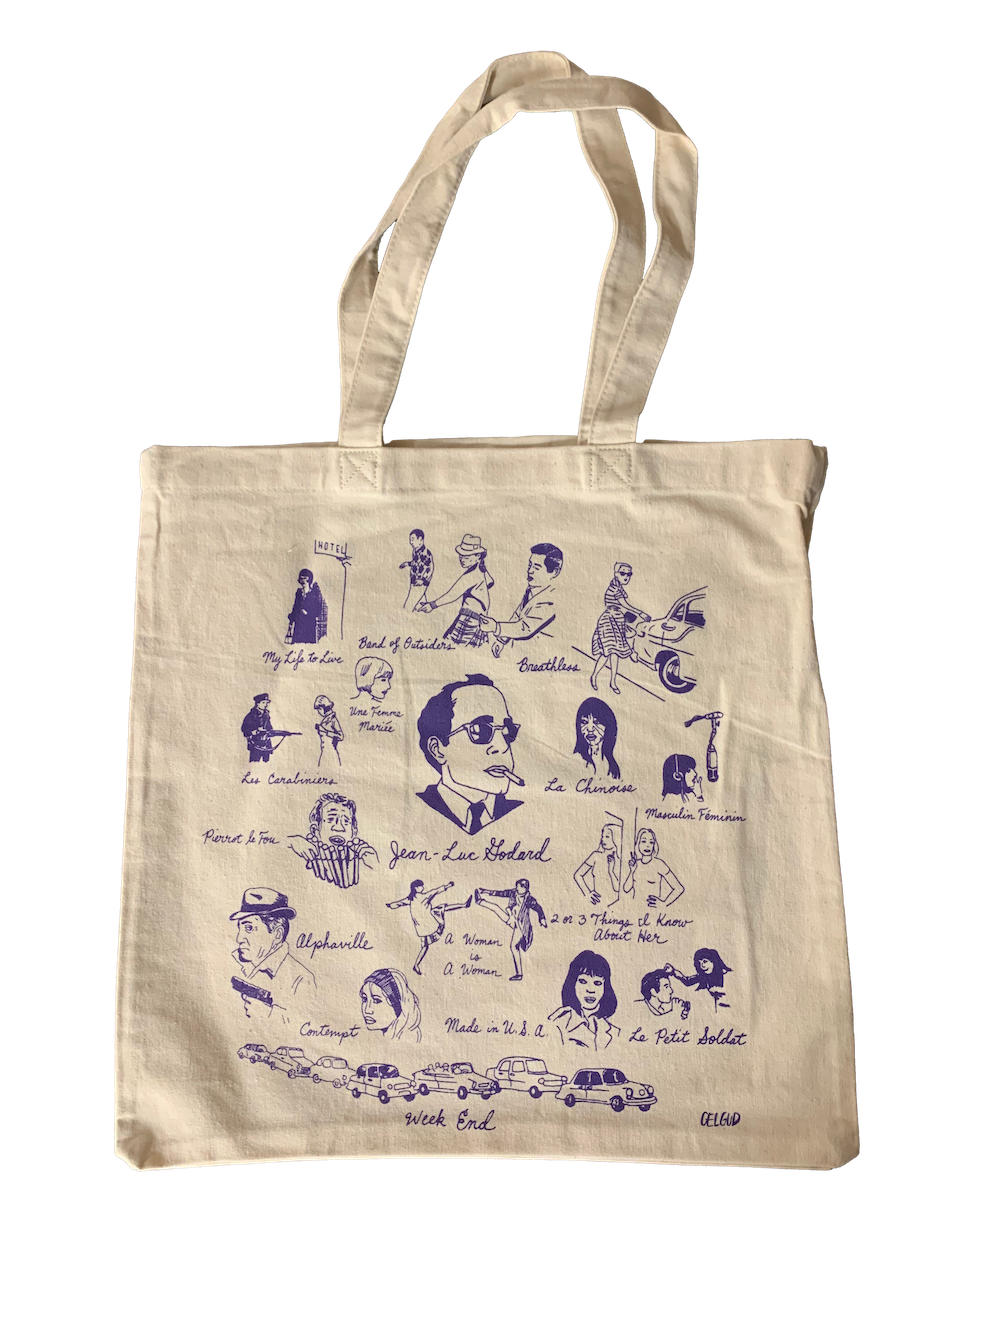 Jean-Luc Godard Tote Bag